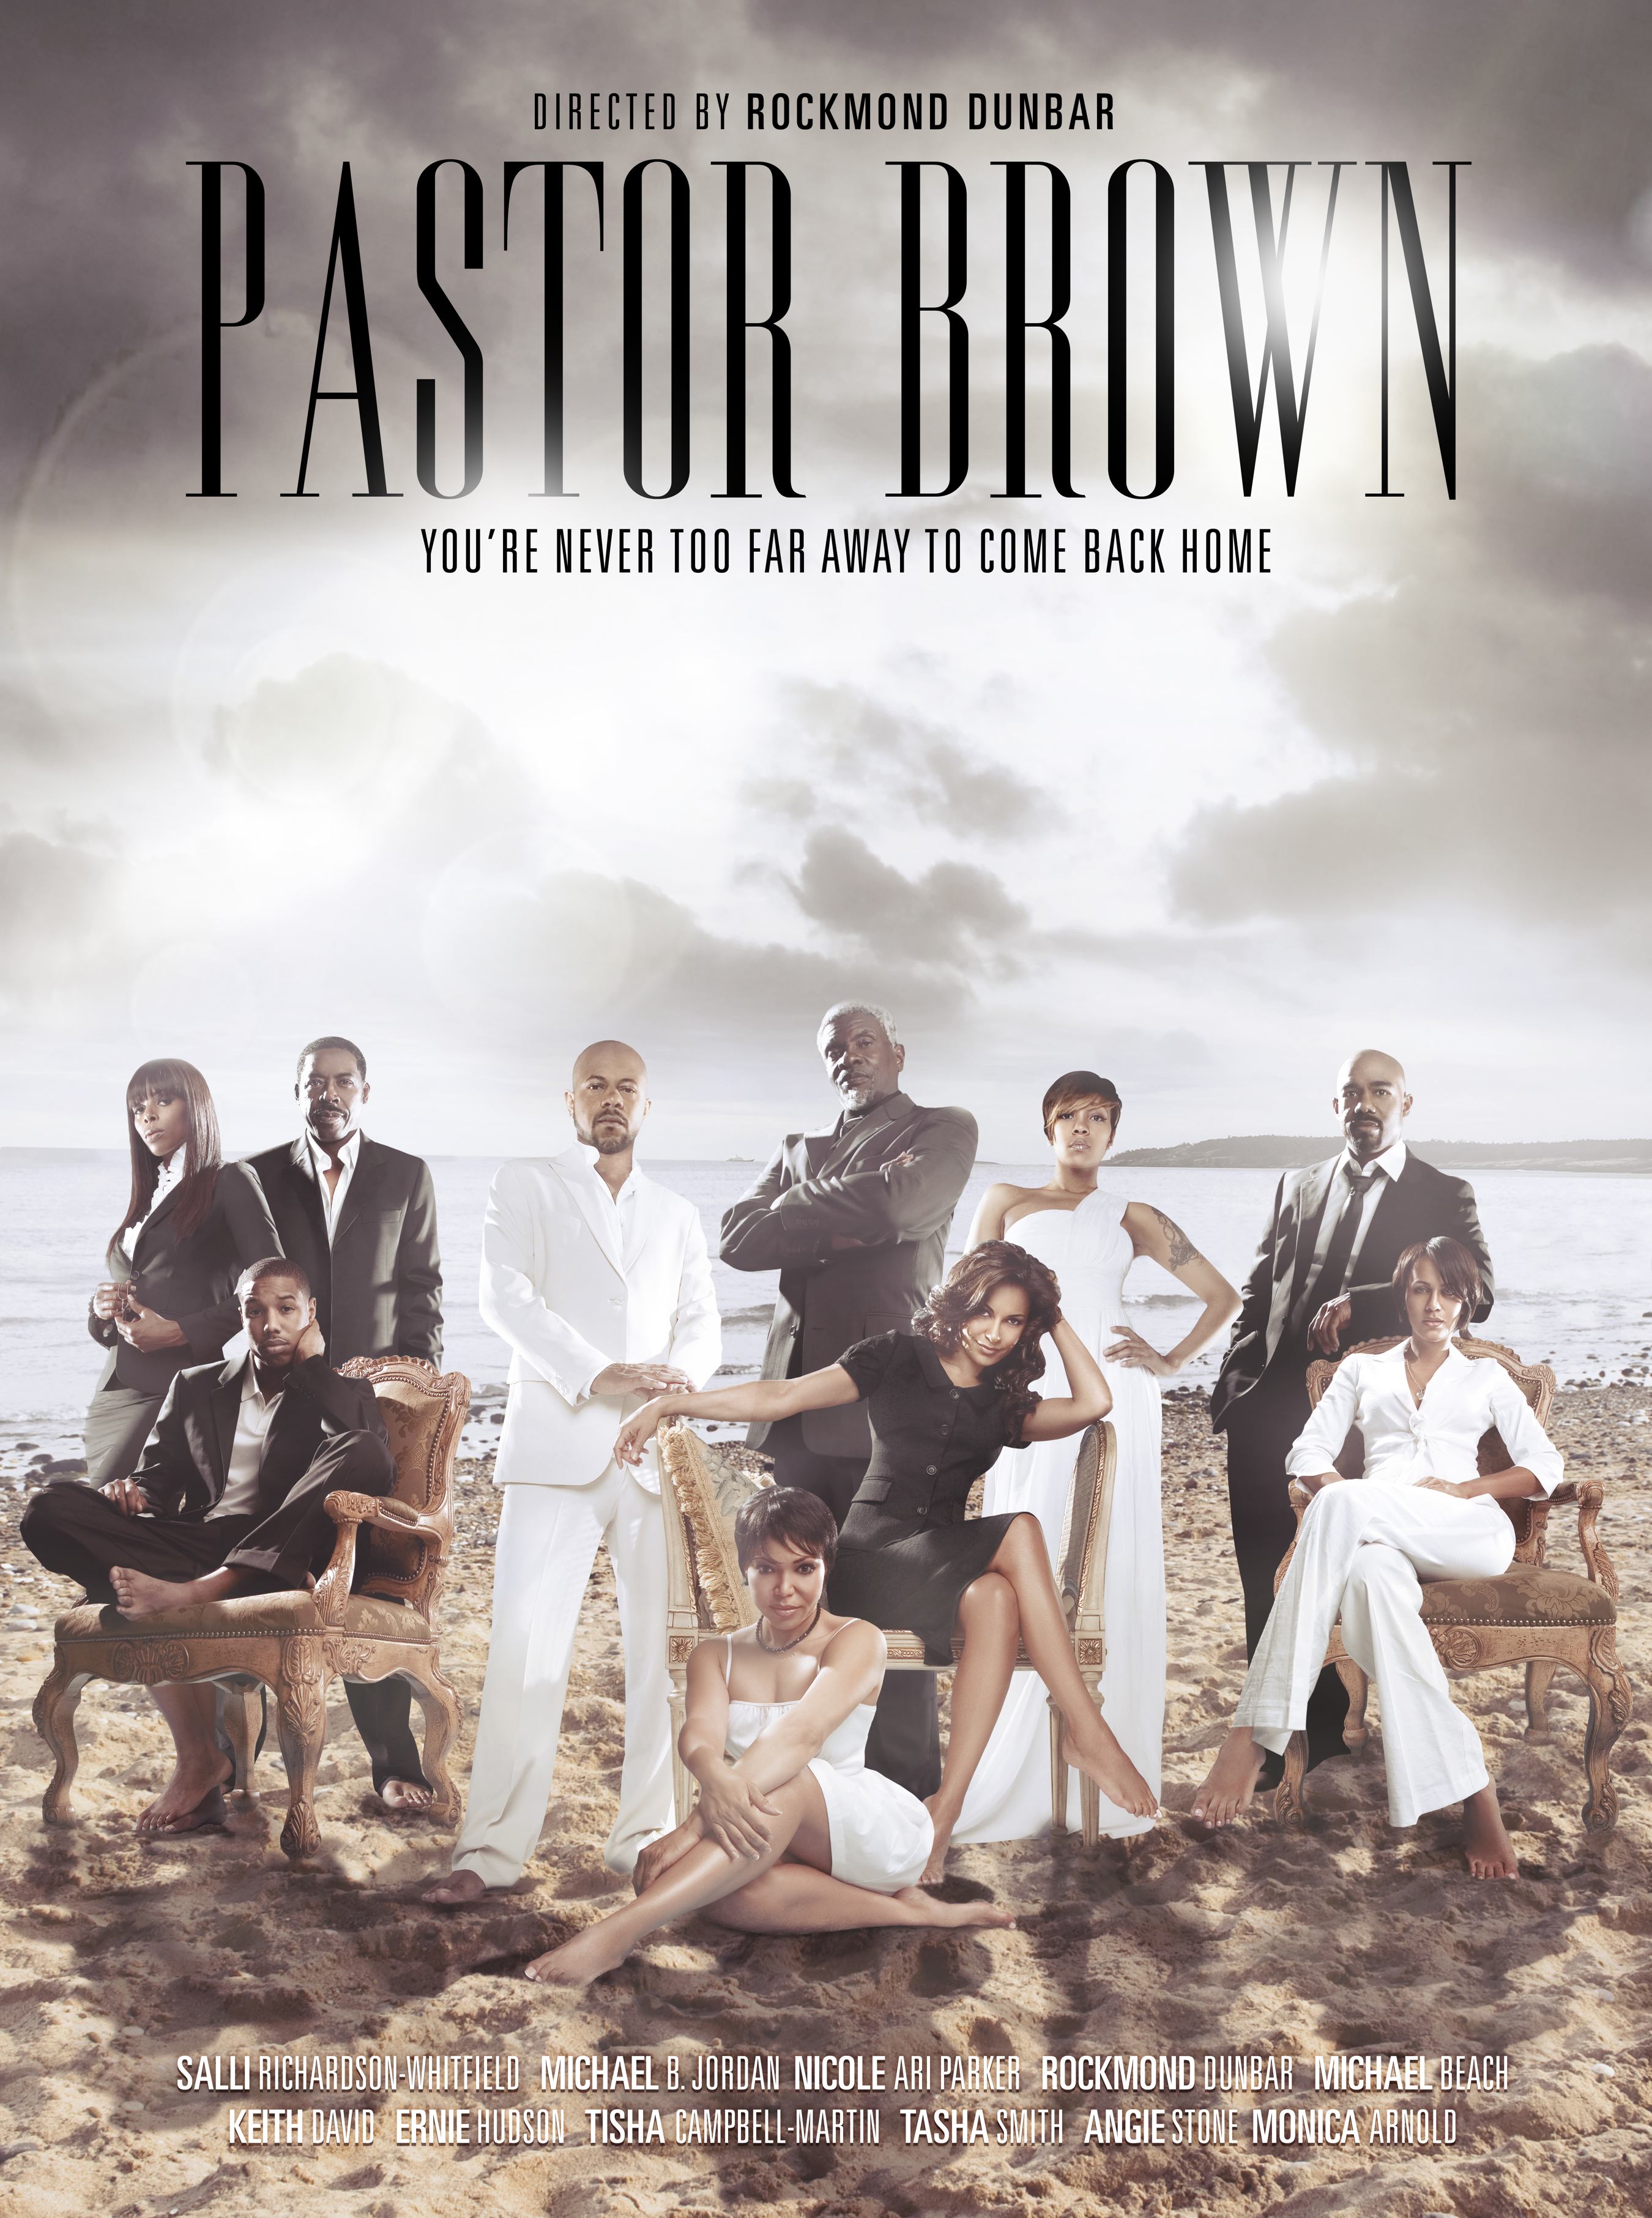 Pastor Brown Directed by Rockmond Dunbar